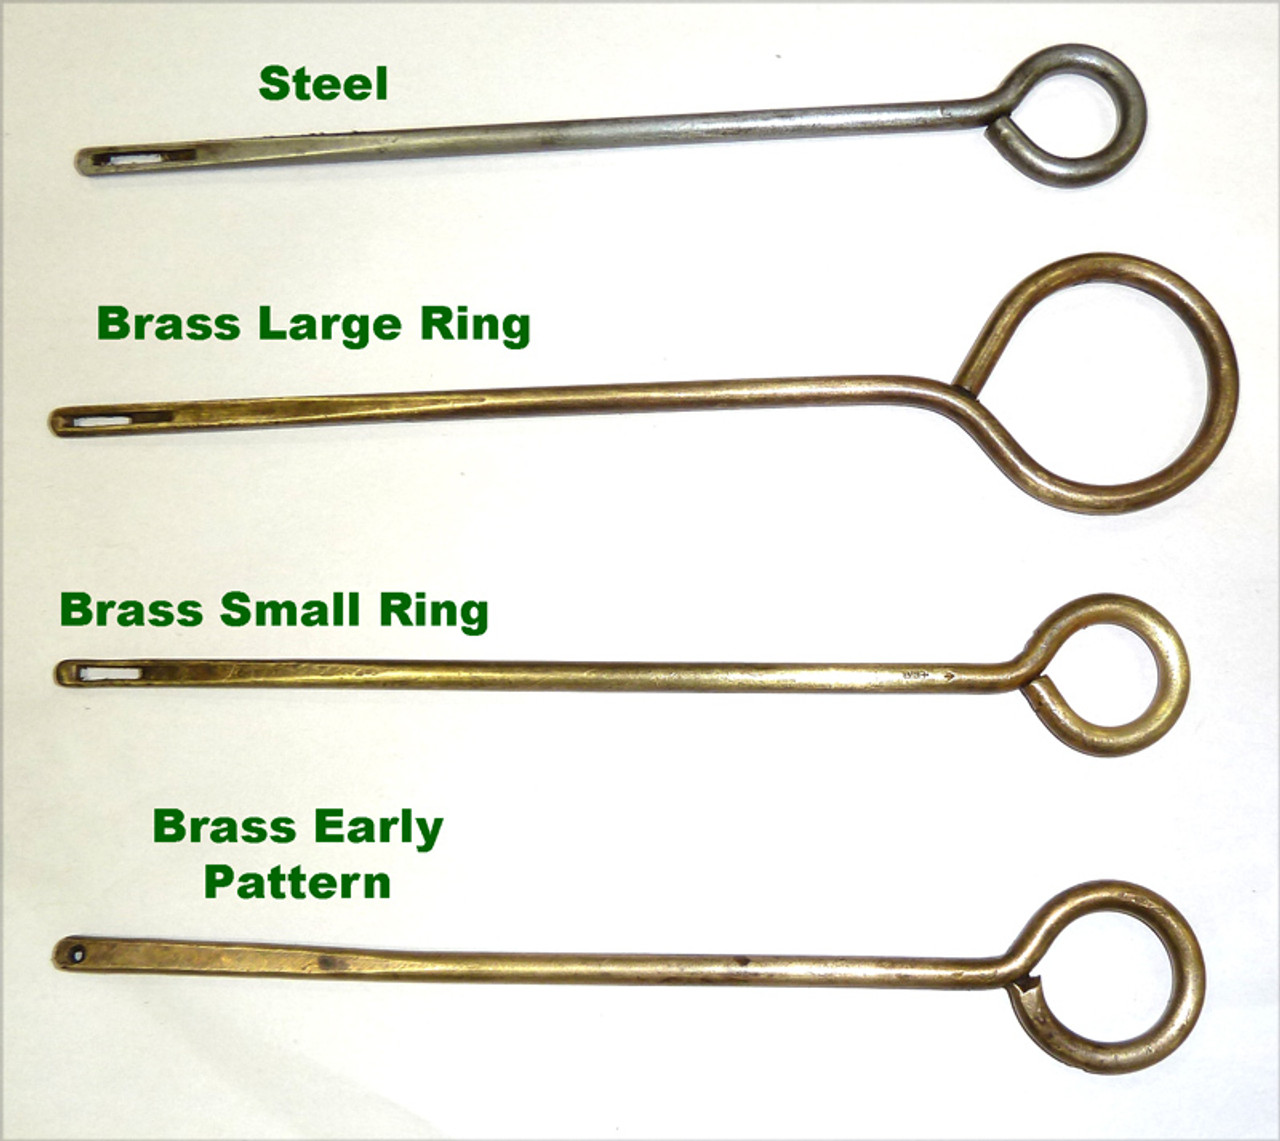 Webley Pistol Cleaning Rod - Brass Small Ring size - no markings